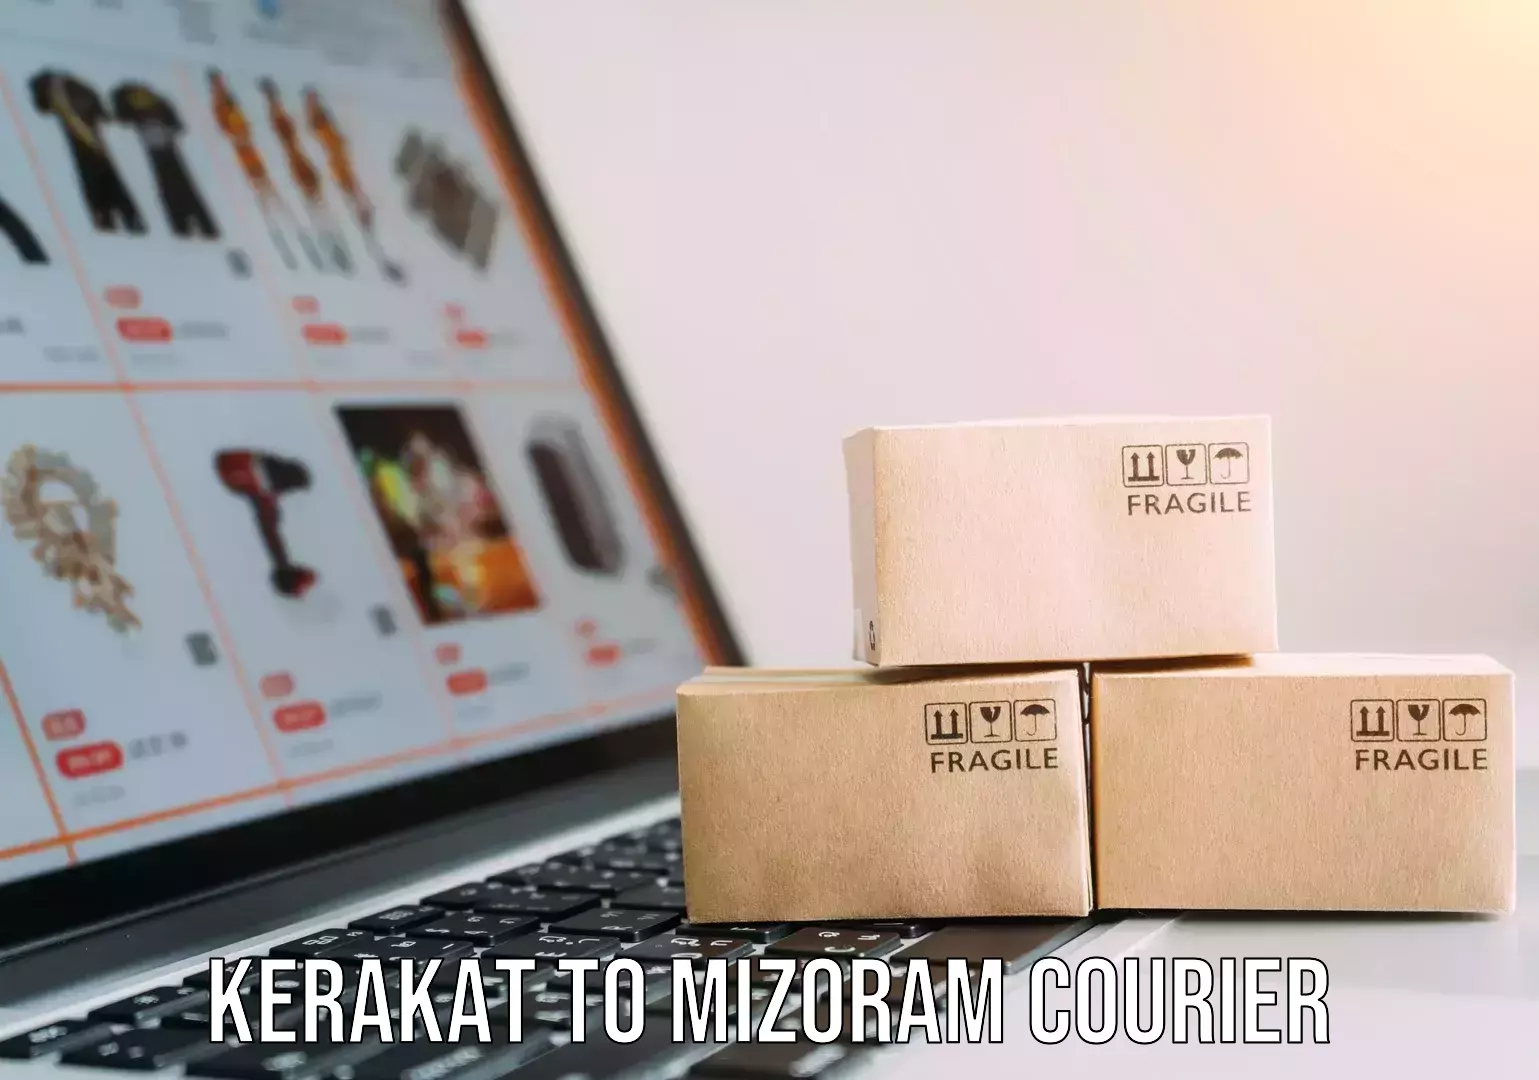 Moving and storage services Kerakat to Mizoram